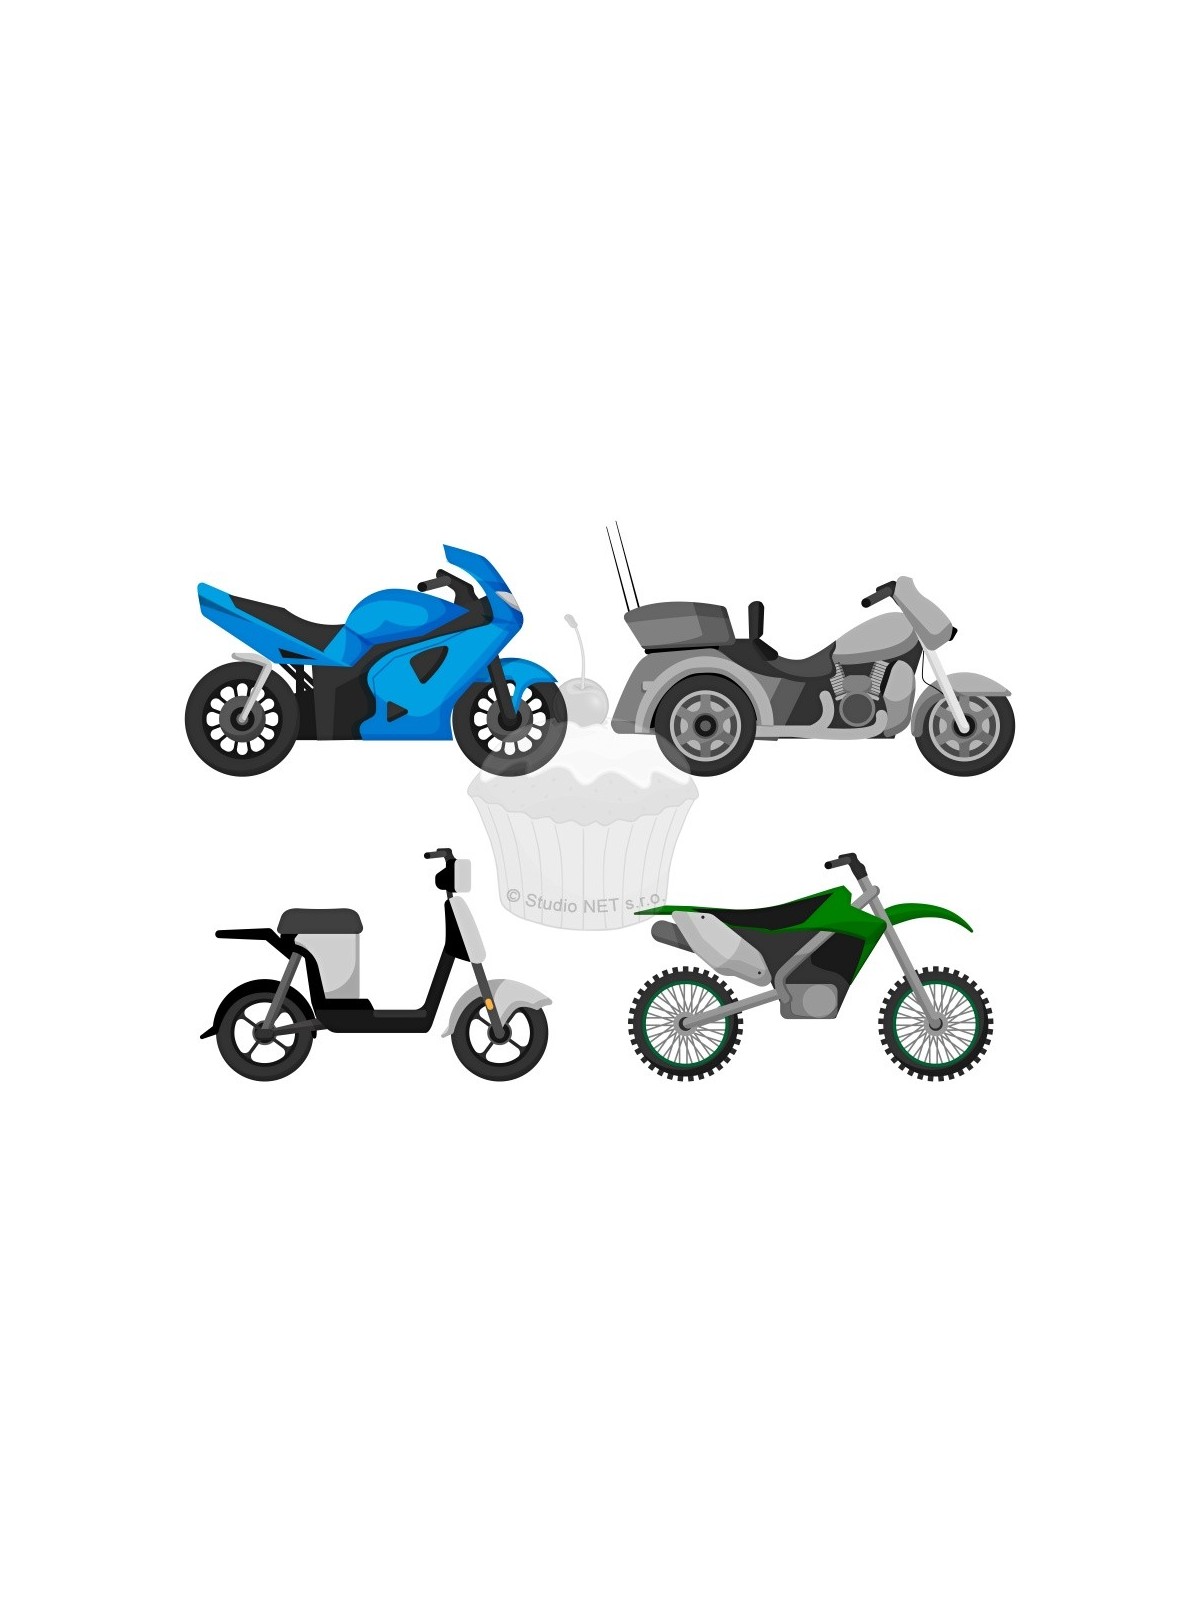 Edible paper "Motorbikes 1" A4